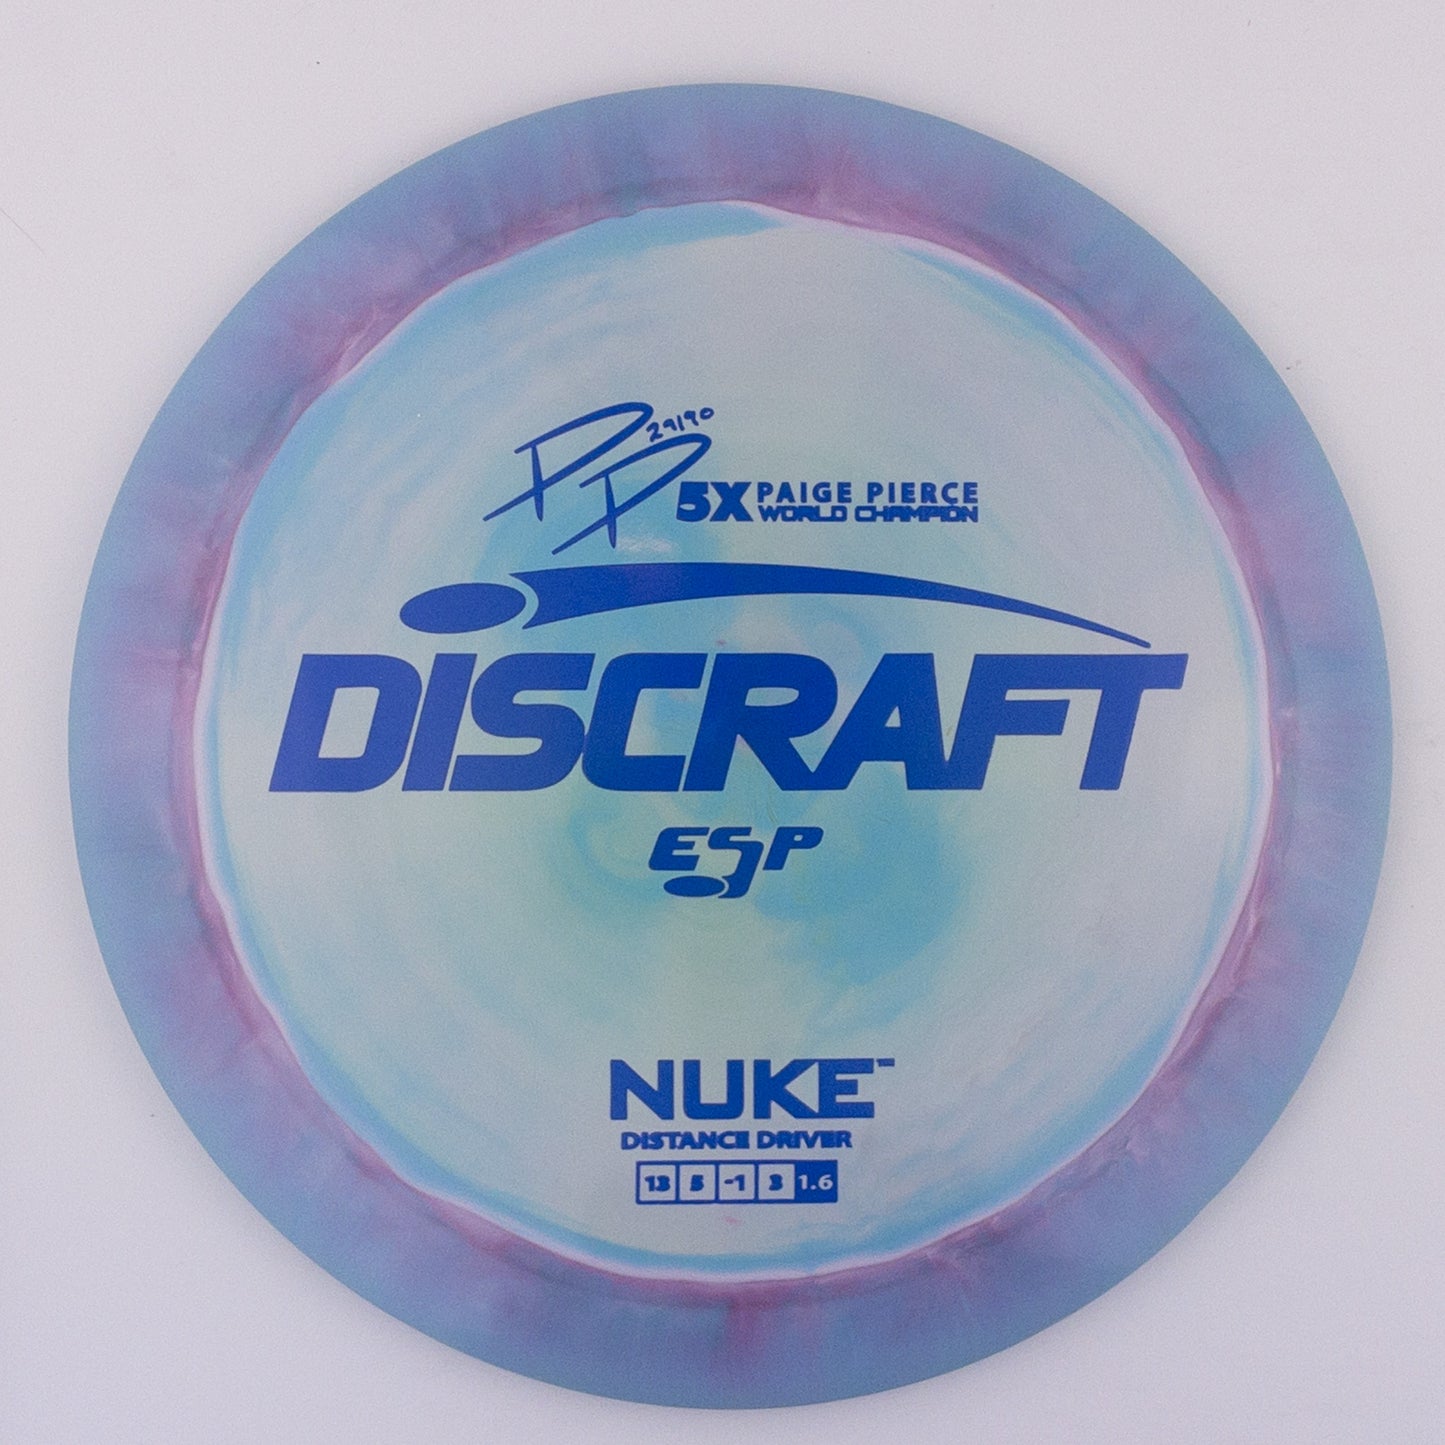 Discraft ESP Nuke